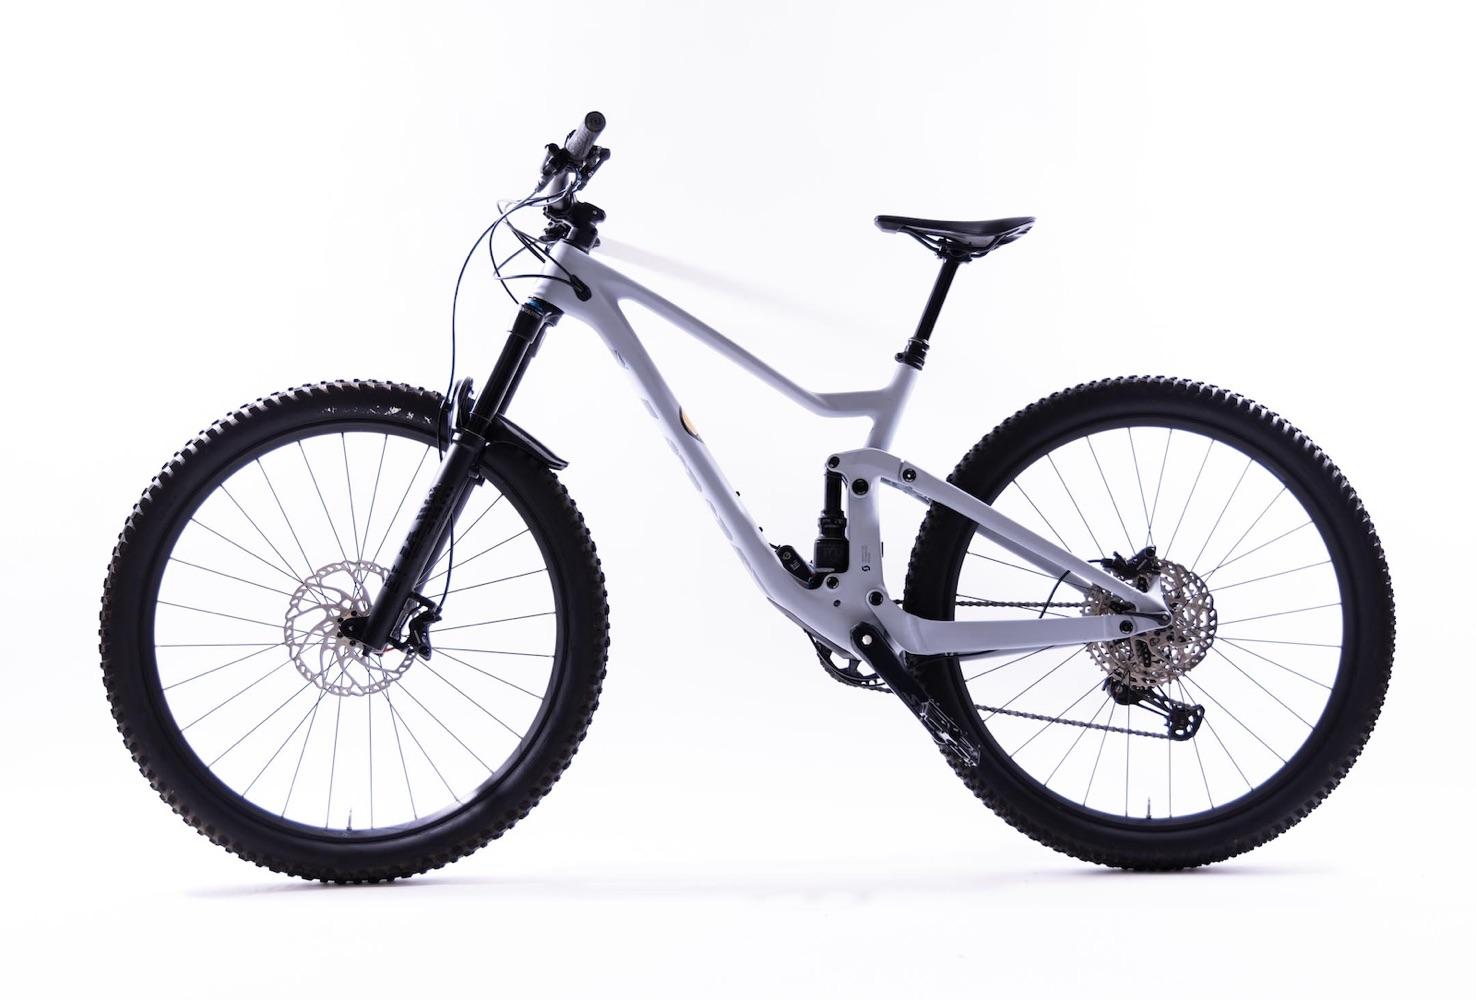 Scott Genius 920 size Med 29” mountain bike